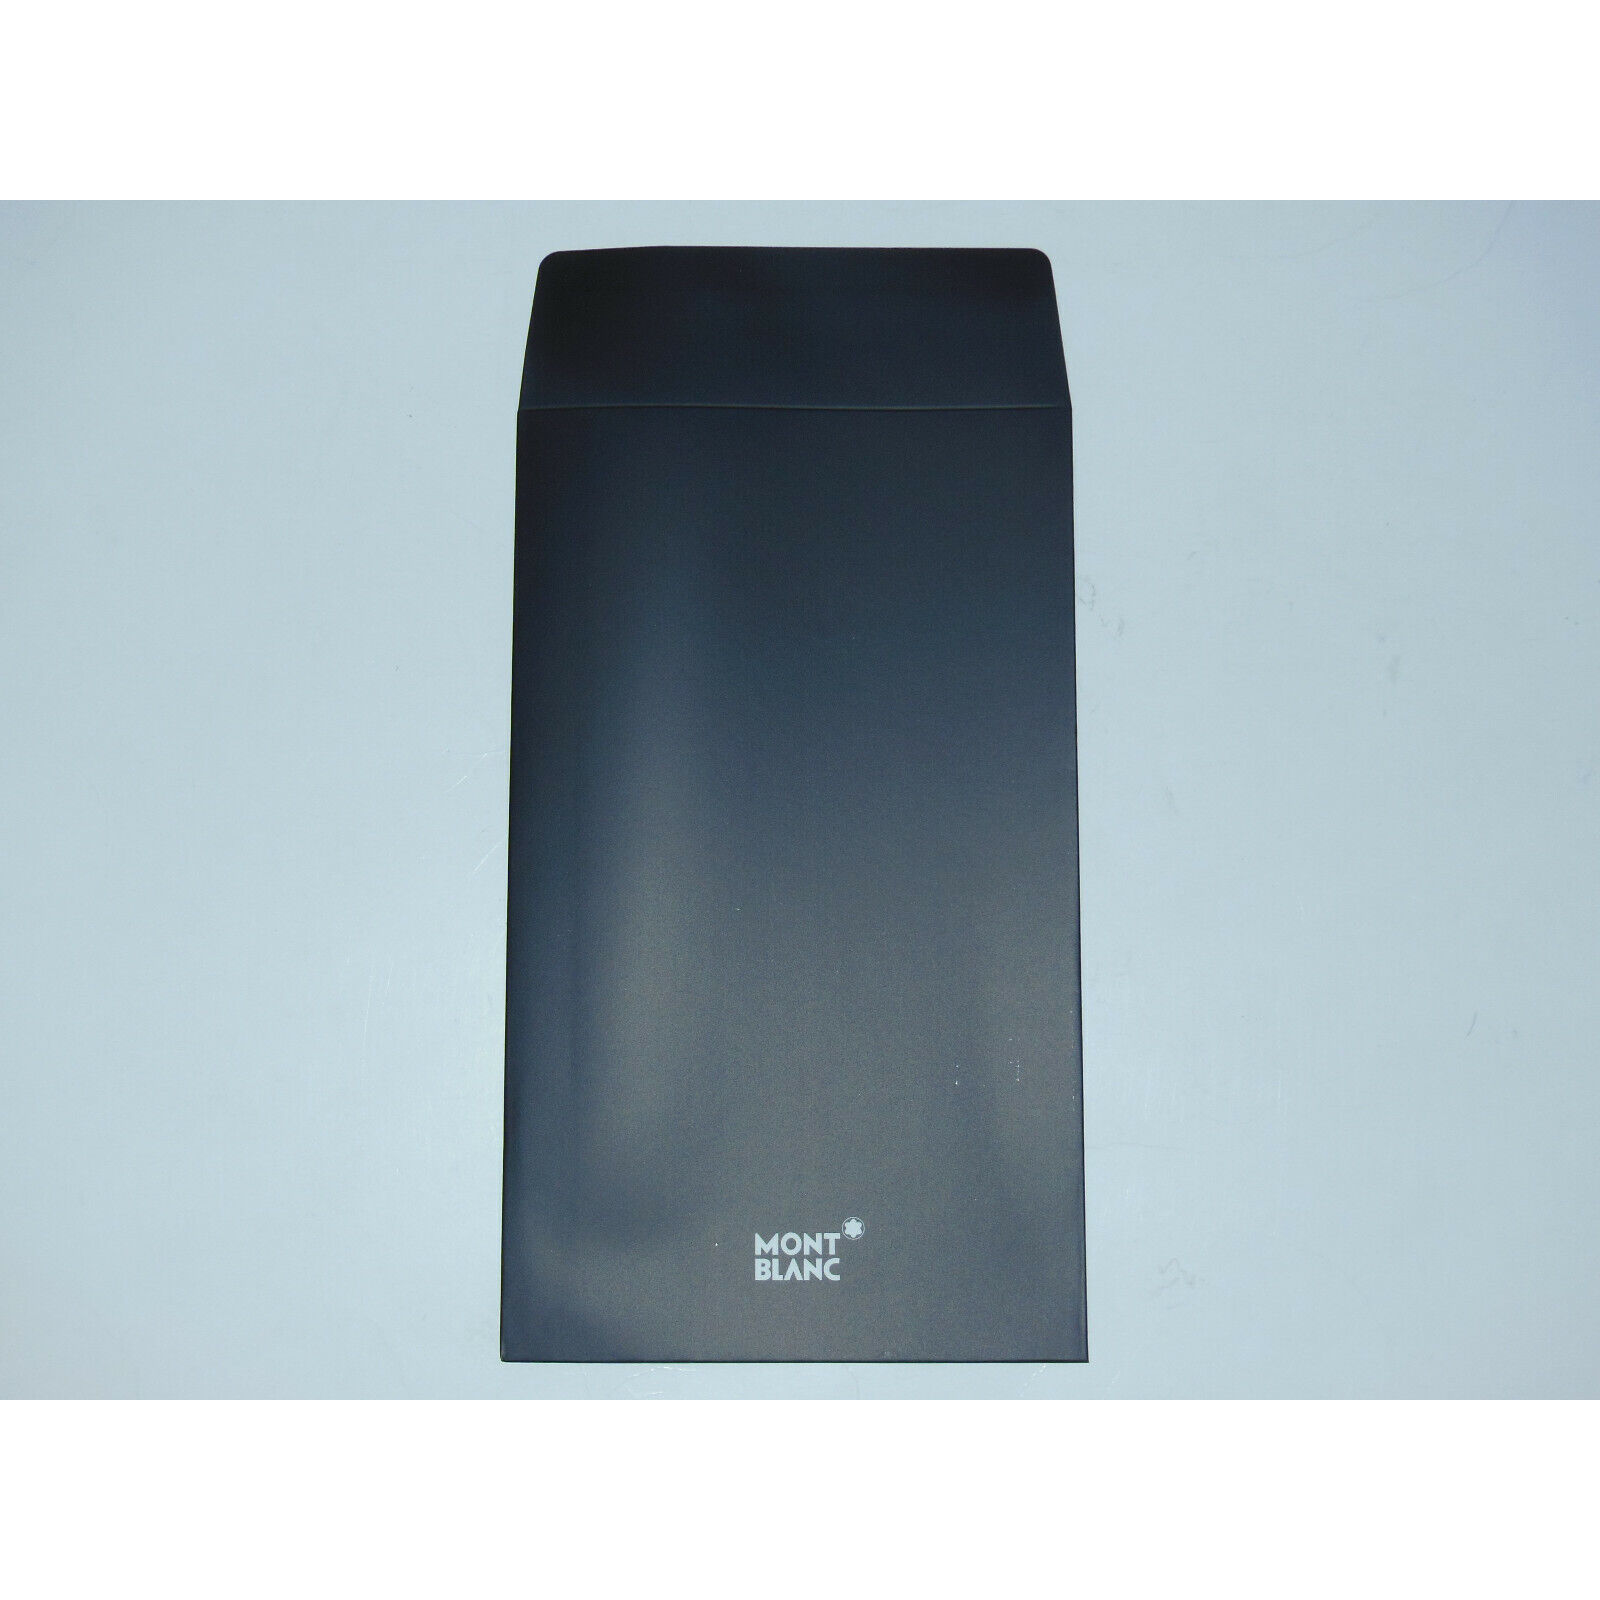 New* Montblanc Refill Bag 48pc 04011351 Black Adhesive Envelopes Retail Receipt